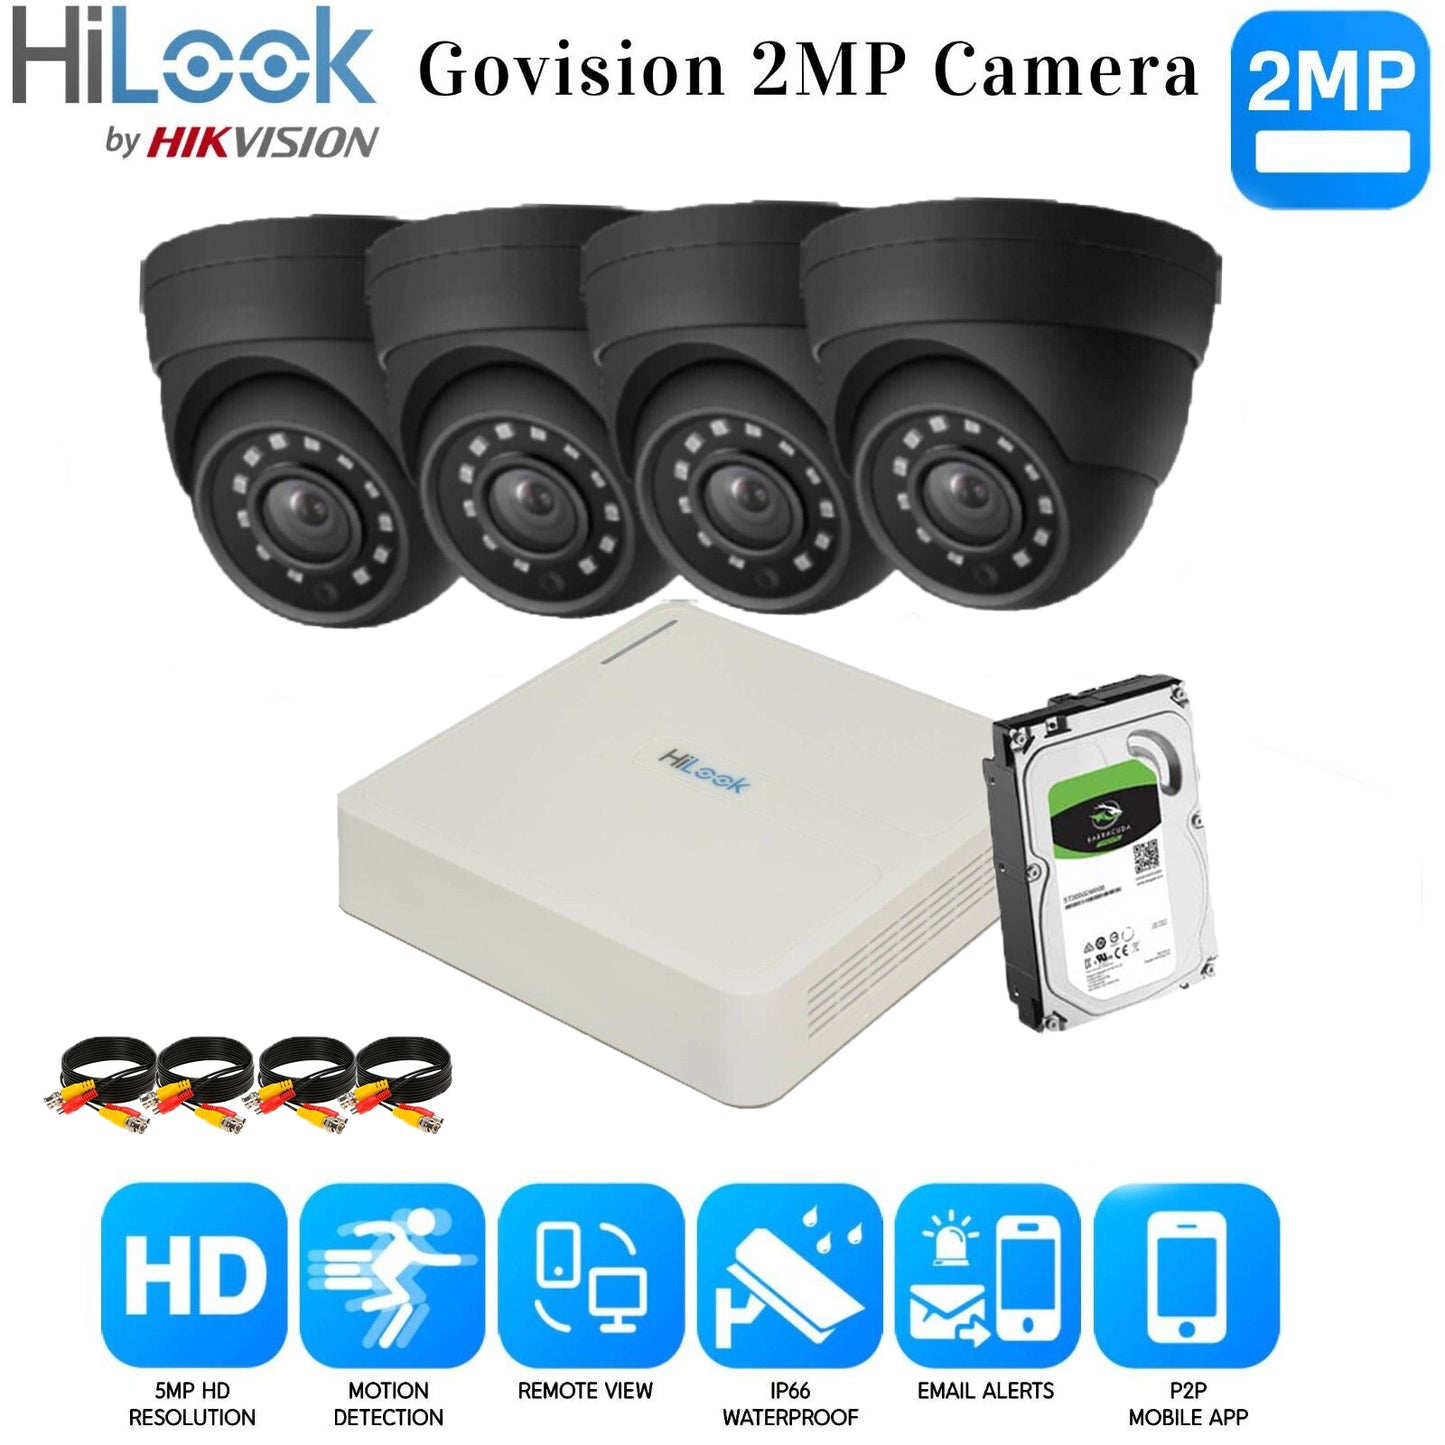 Hikvision Home Outdoor CCTV Security Camera System Kit HD 1080P 4CH DVR IR NIGHT 8CH DVR 4xCameras (gray) 1TB HDD